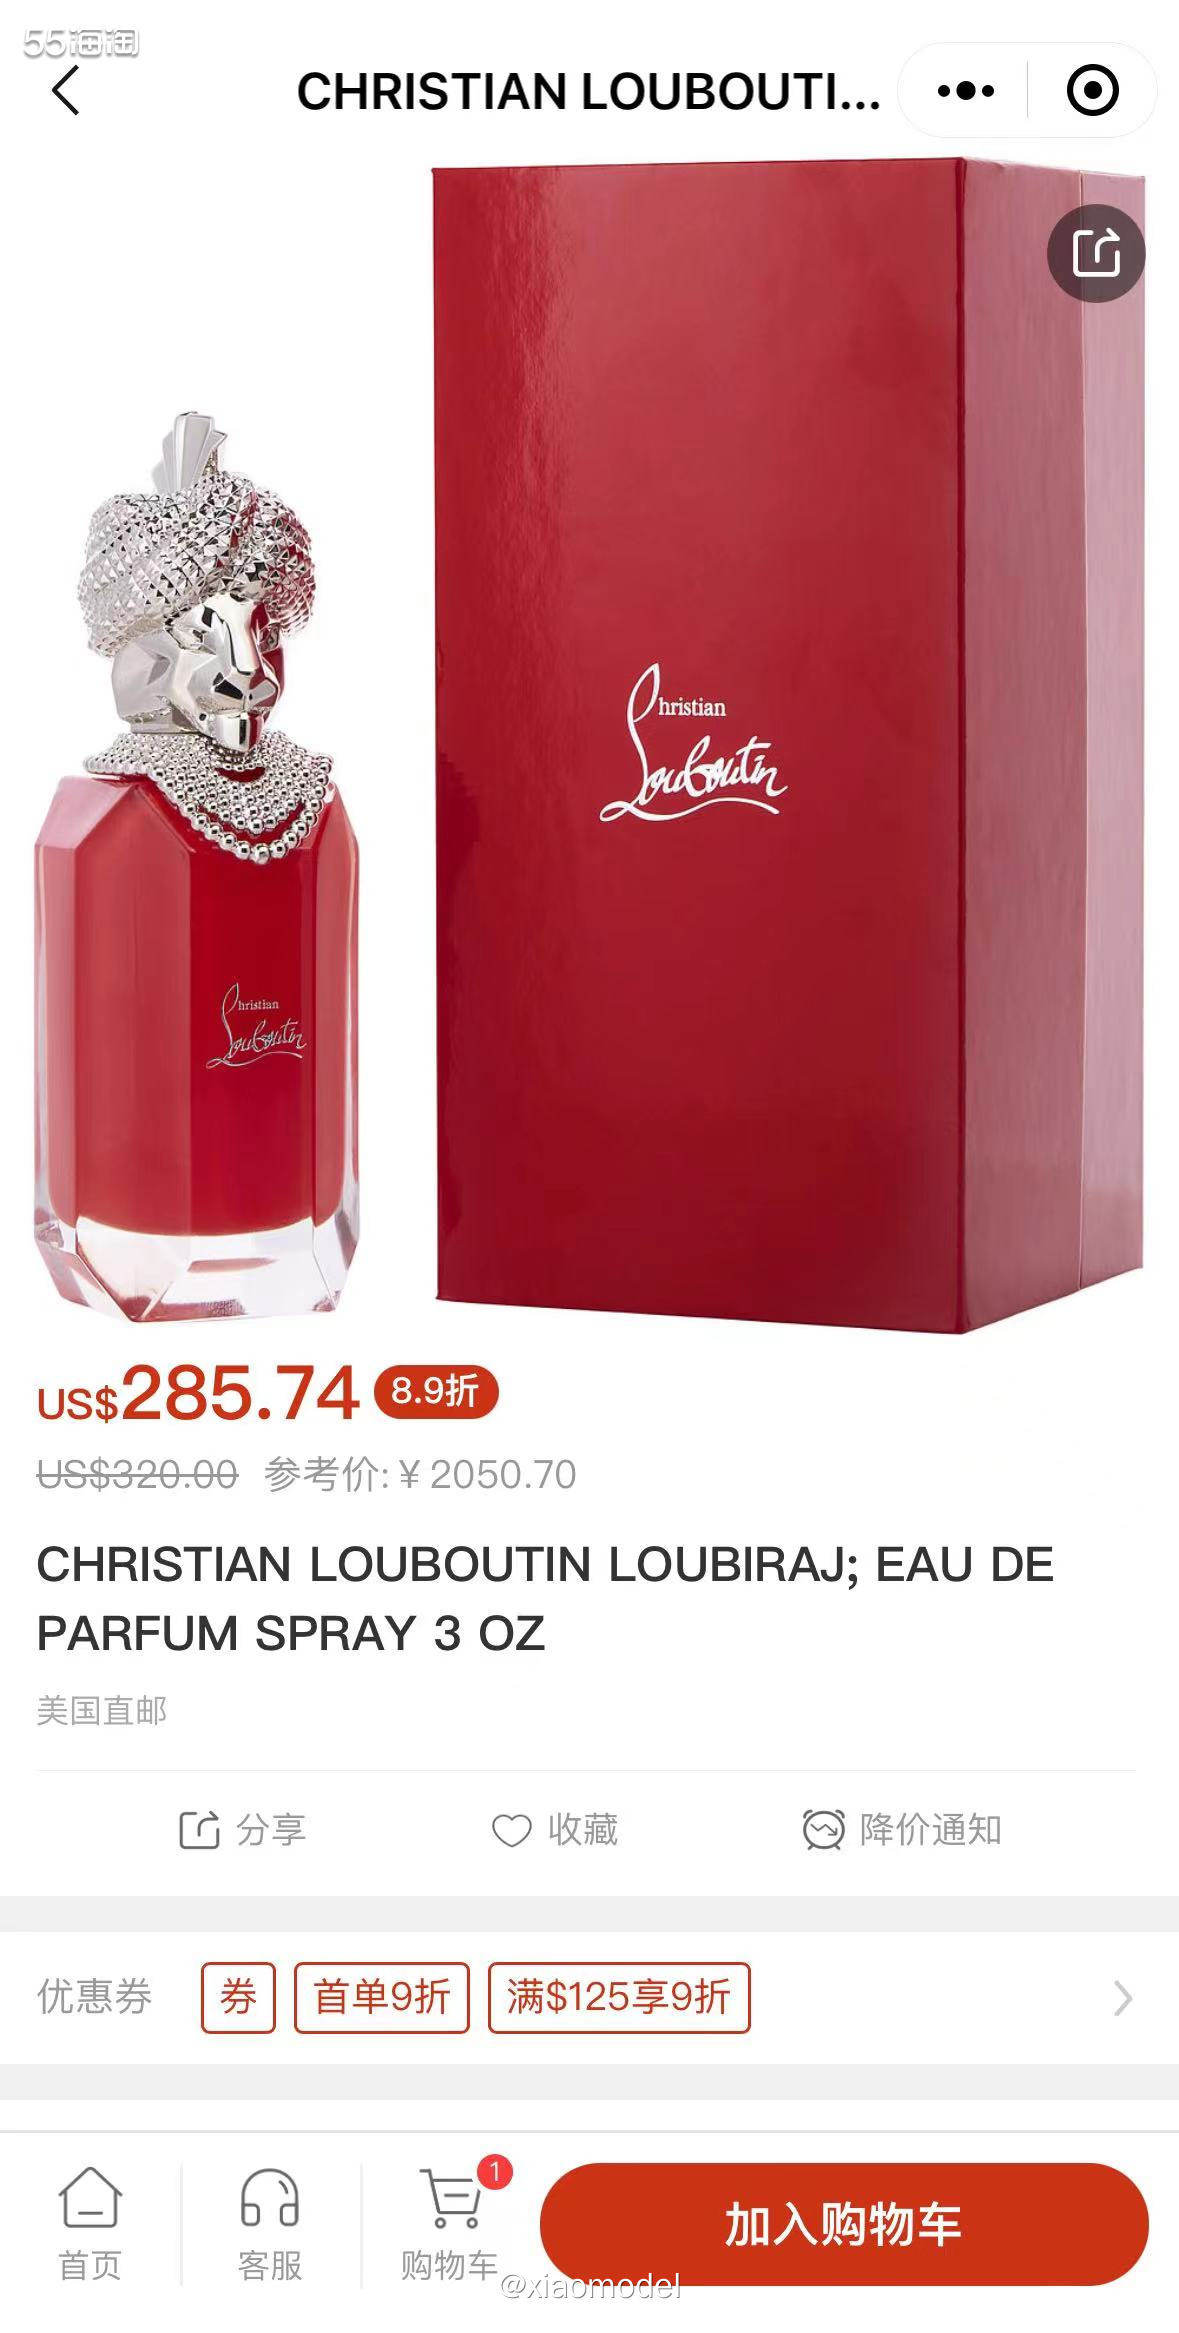 Christian Louboutin Loubiraj Eau De Parfum Spray 3 oz 